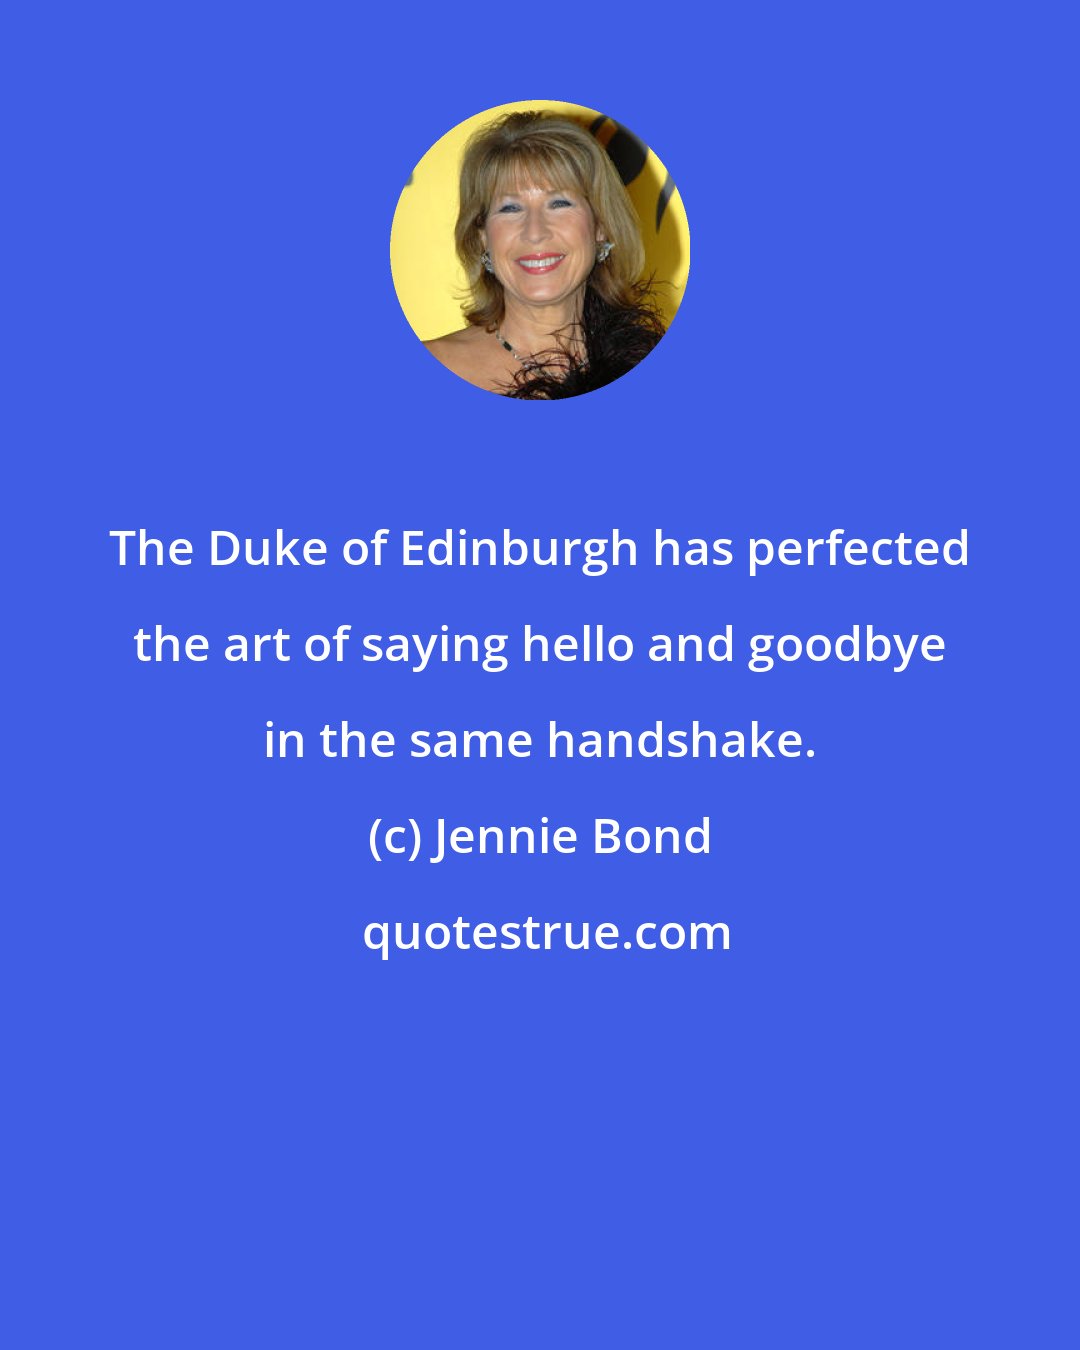 Jennie Bond: The Duke of Edinburgh has perfected the art of saying hello and goodbye in the same handshake.